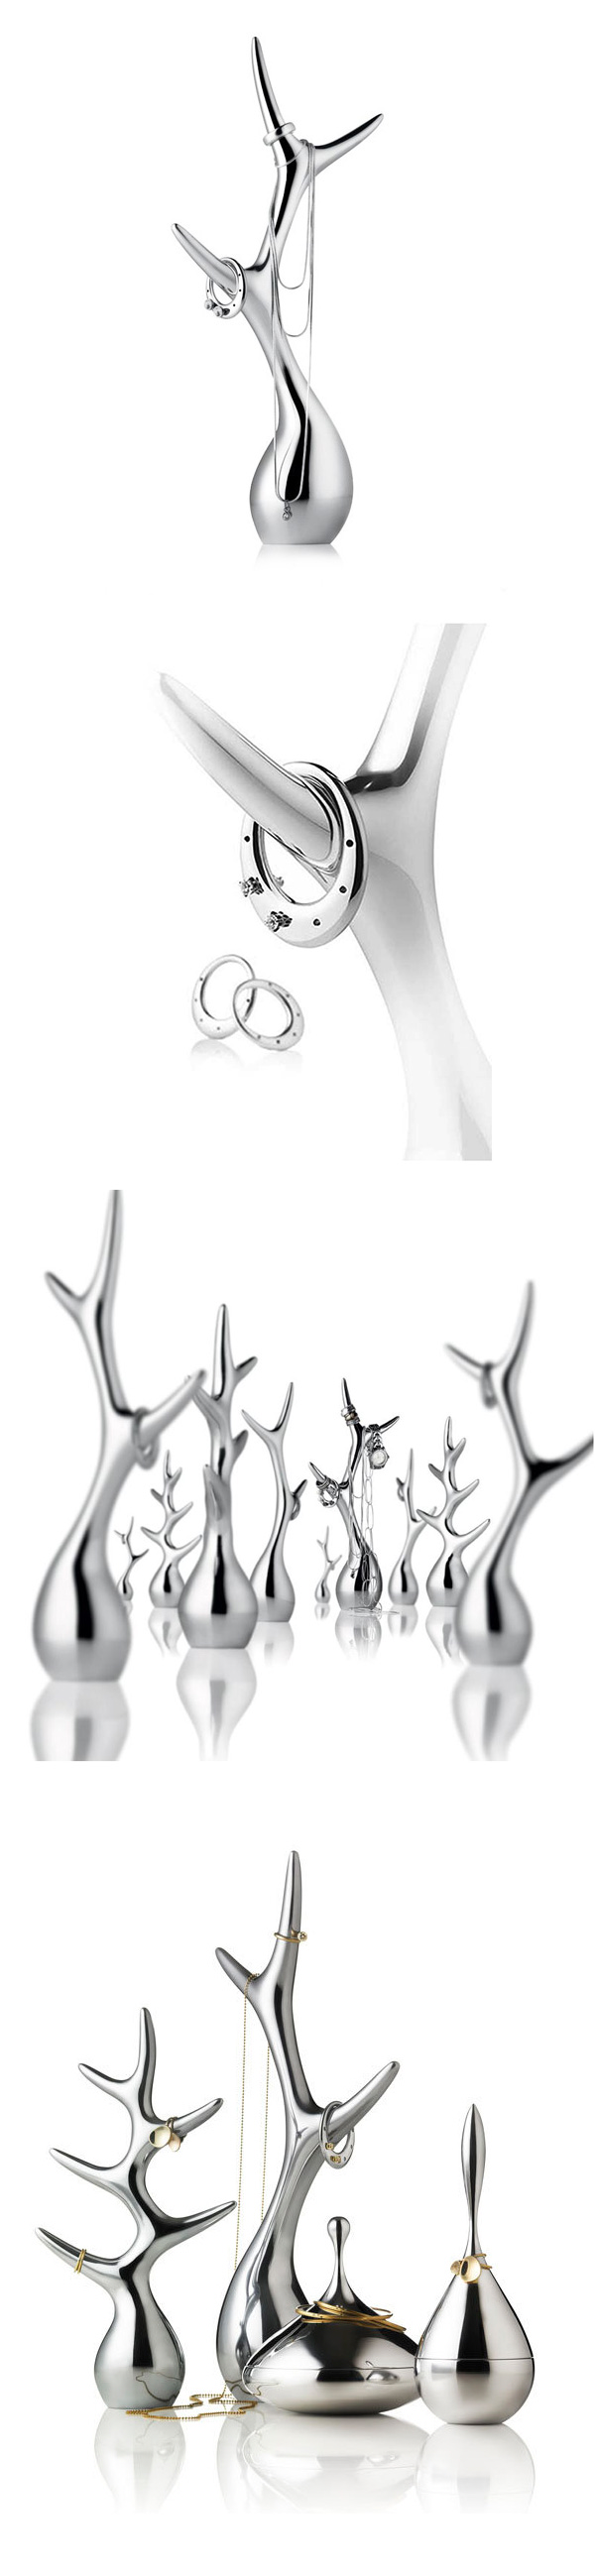 Menu Jewellery Tree Large With Ring For Ear Studs 珠寶樹 大尺寸，Louise Christ (dk) 設計